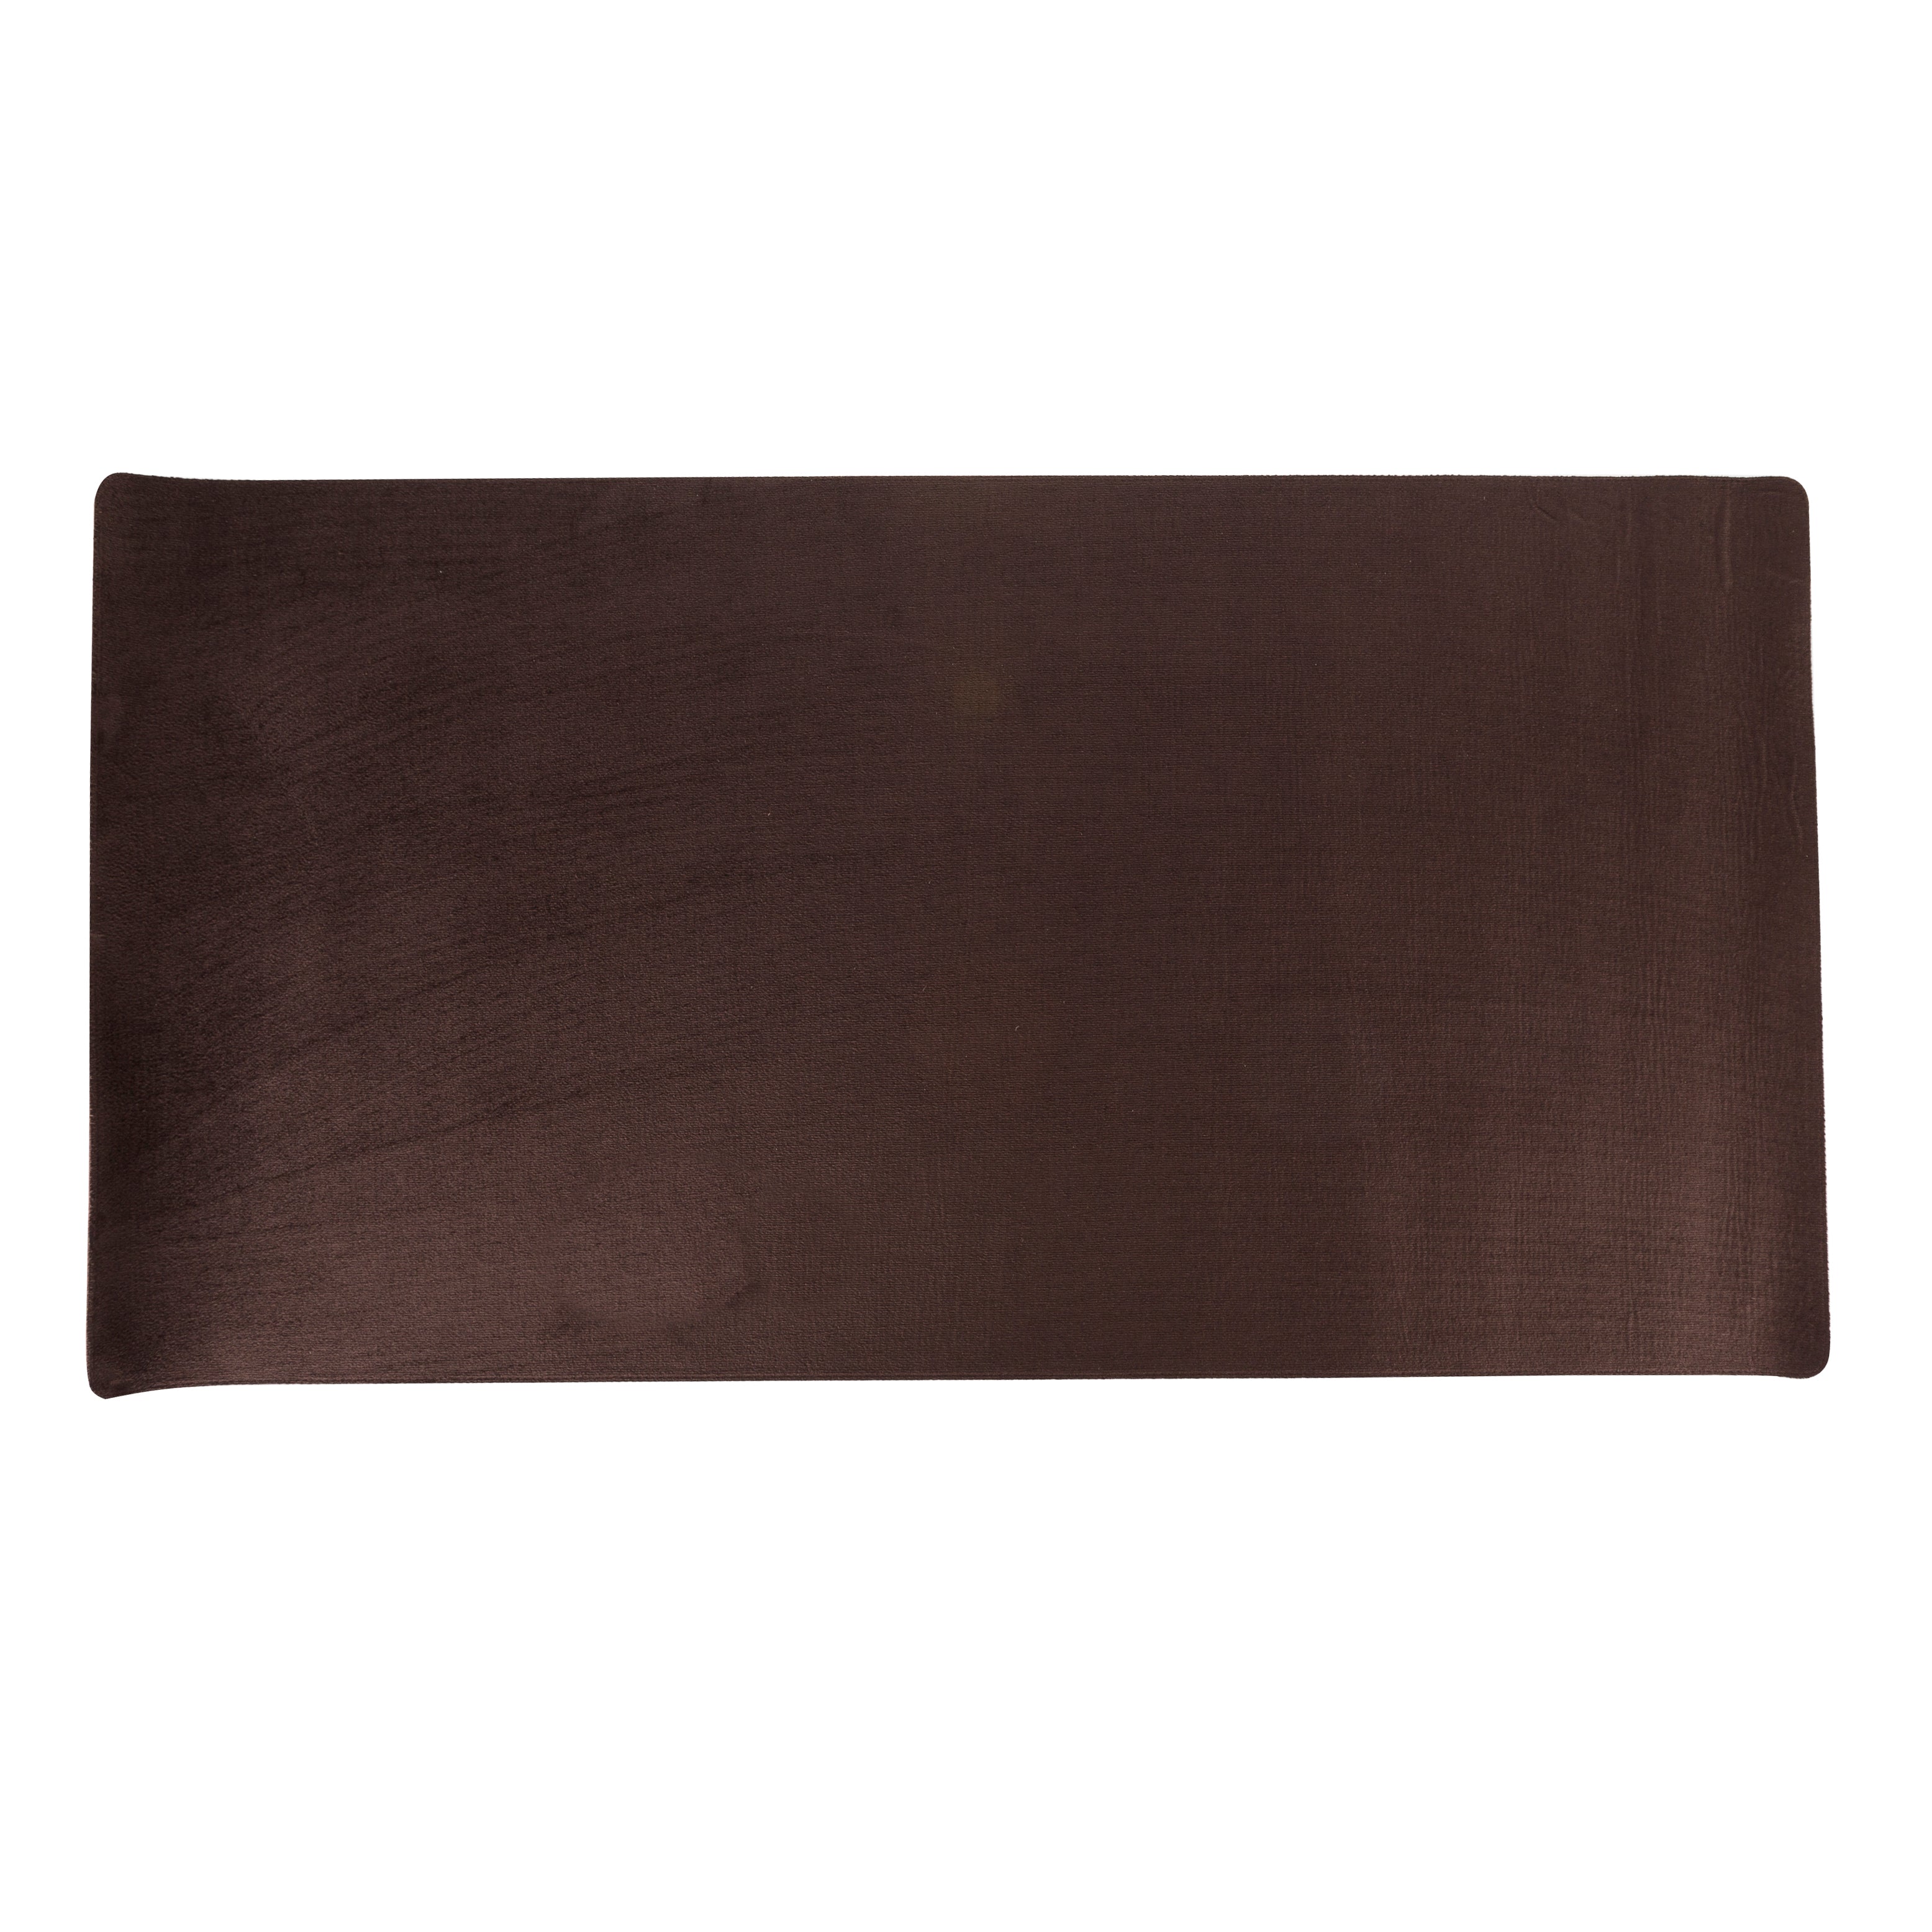 LupinnyLeather Genuine Dark Brown Leather Deskmat, Computer Pad, Office Desk Pad 4